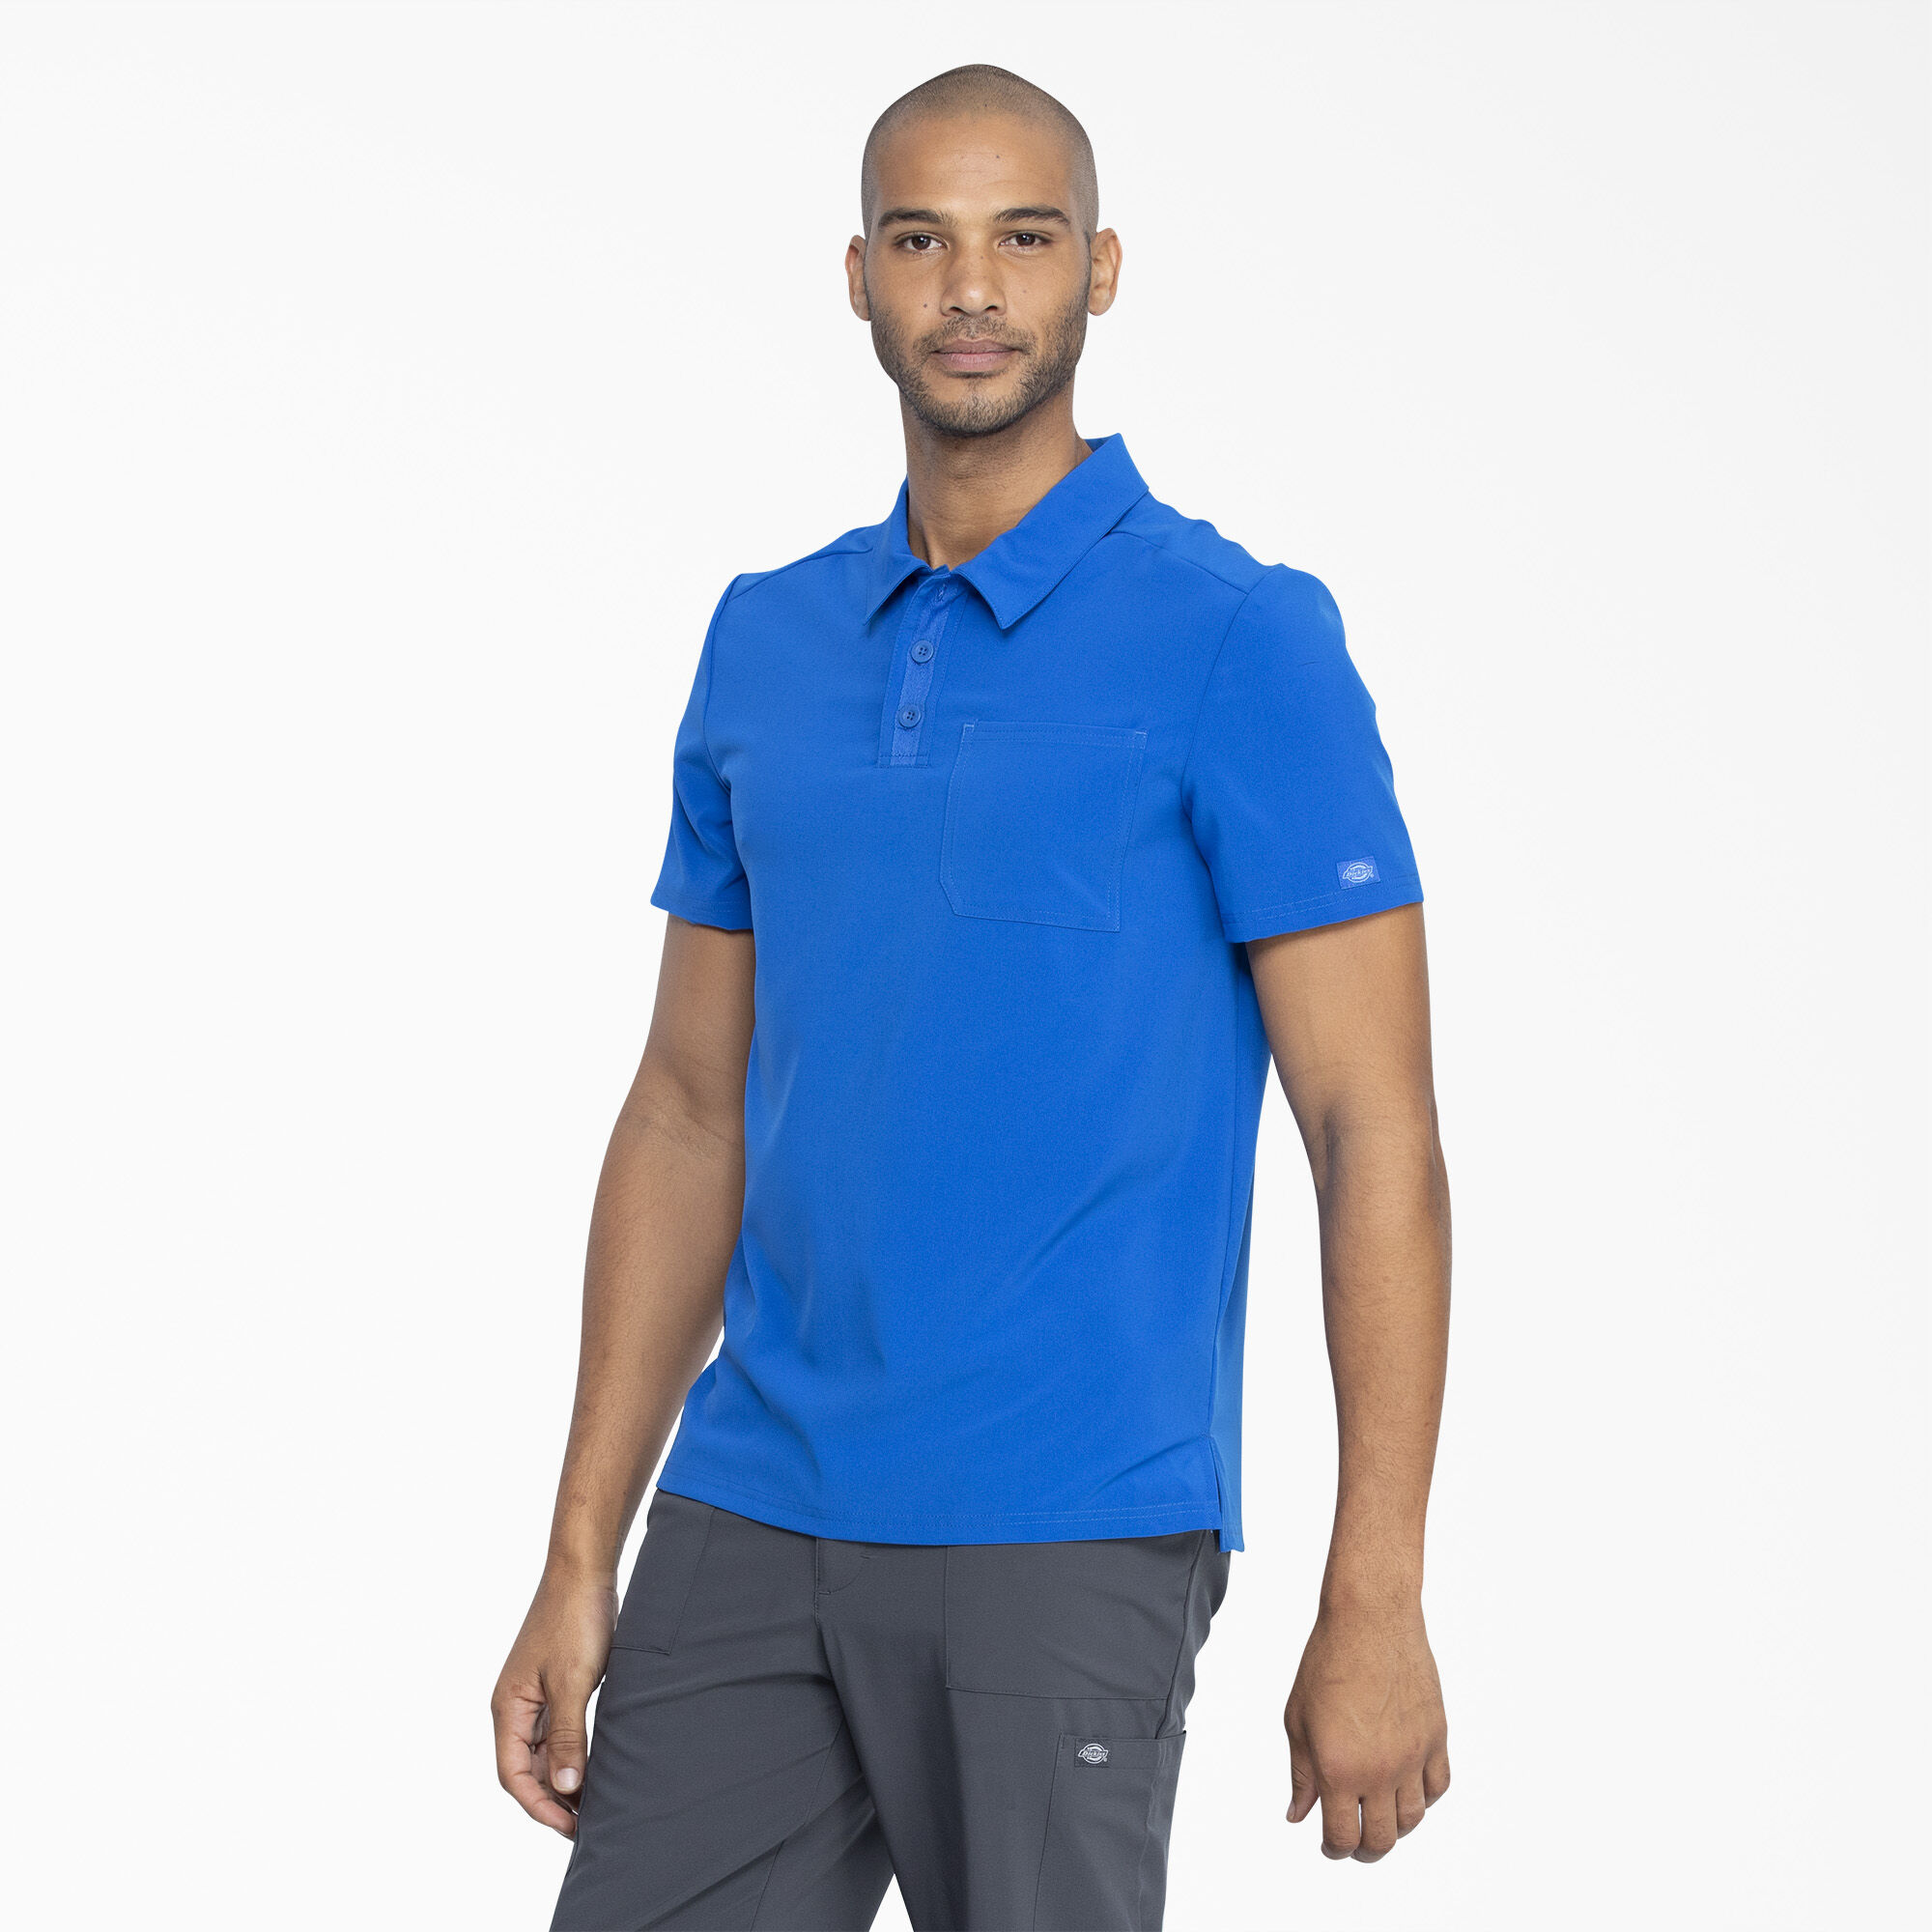 Men's EDS Essentials Medical Polo Shirt - Dickies US, Royal Blue